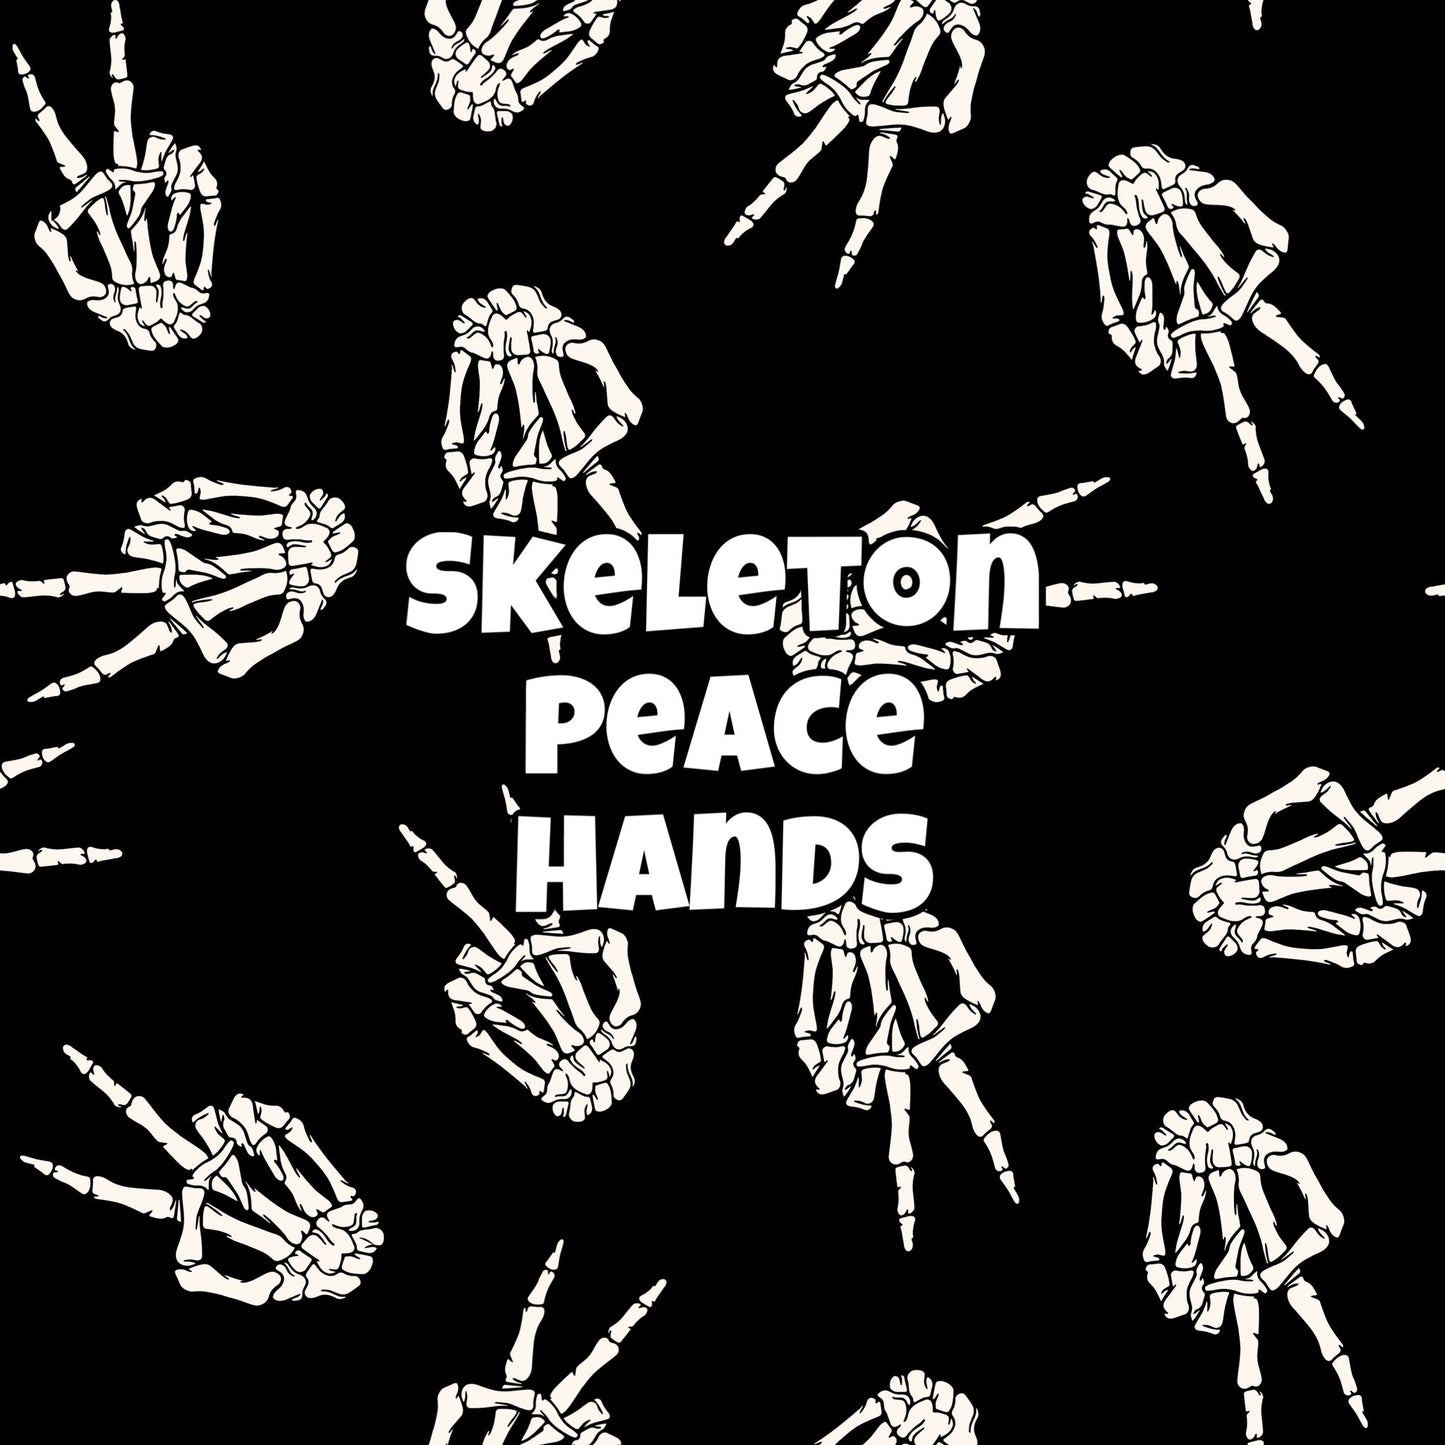 SKELETON PEACE HANDS